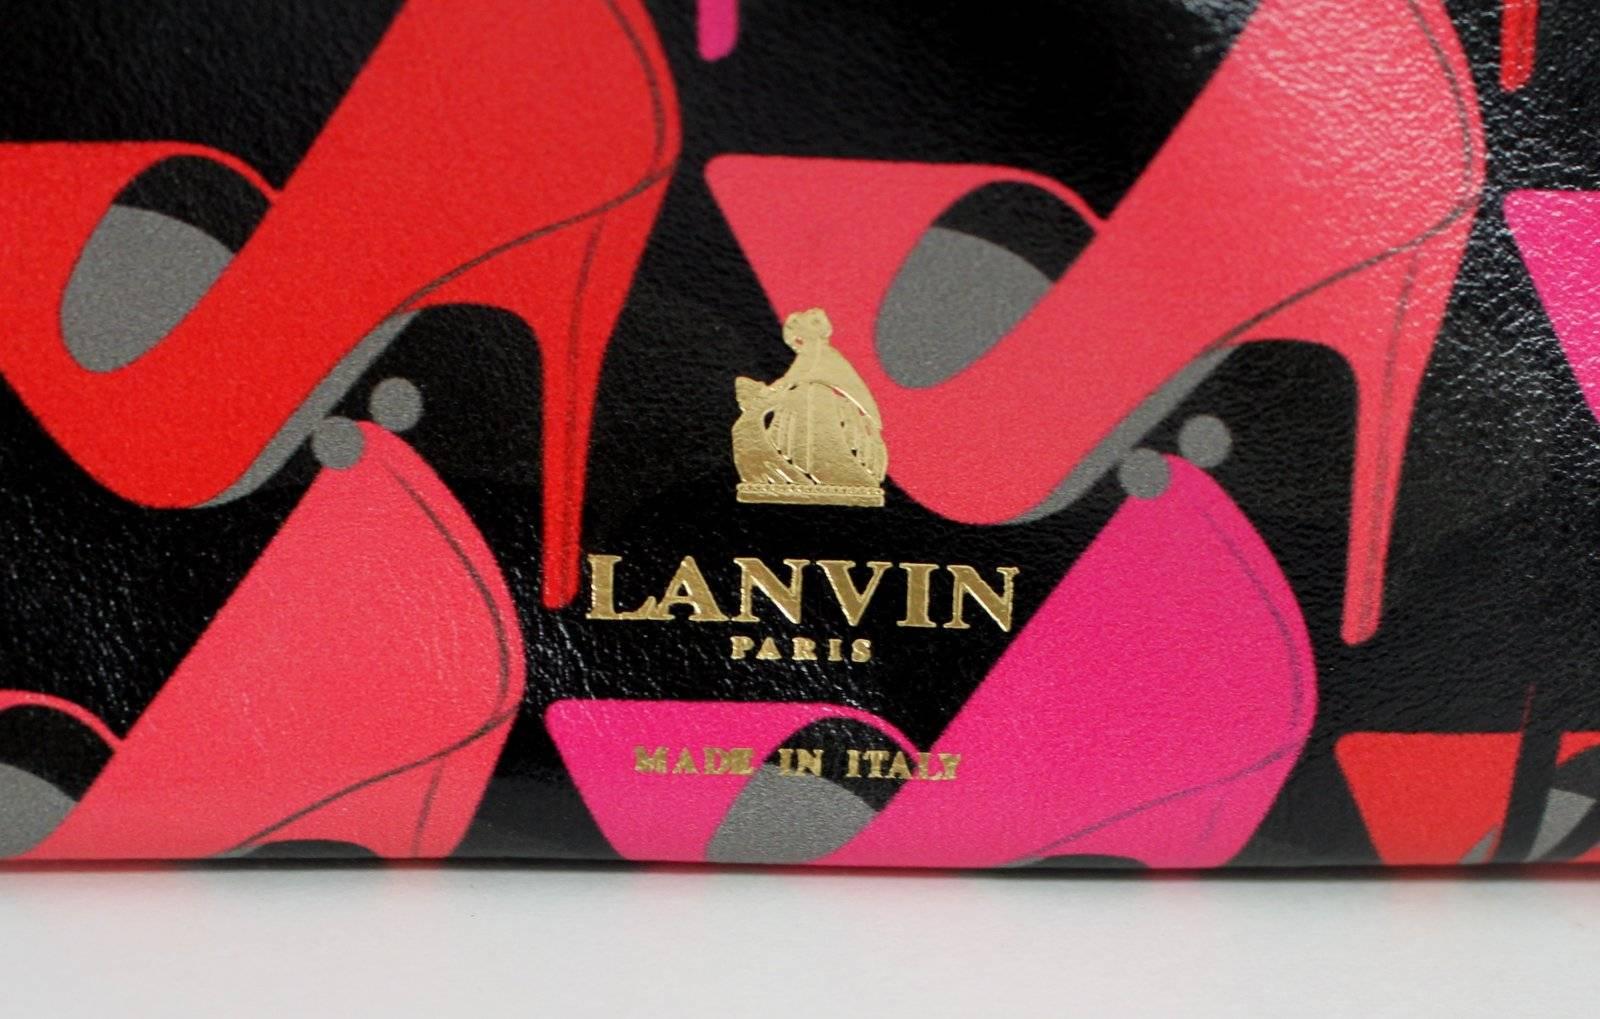 Lanvin Pink Shoe Print on Black Leather Tote Bag For Sale 1